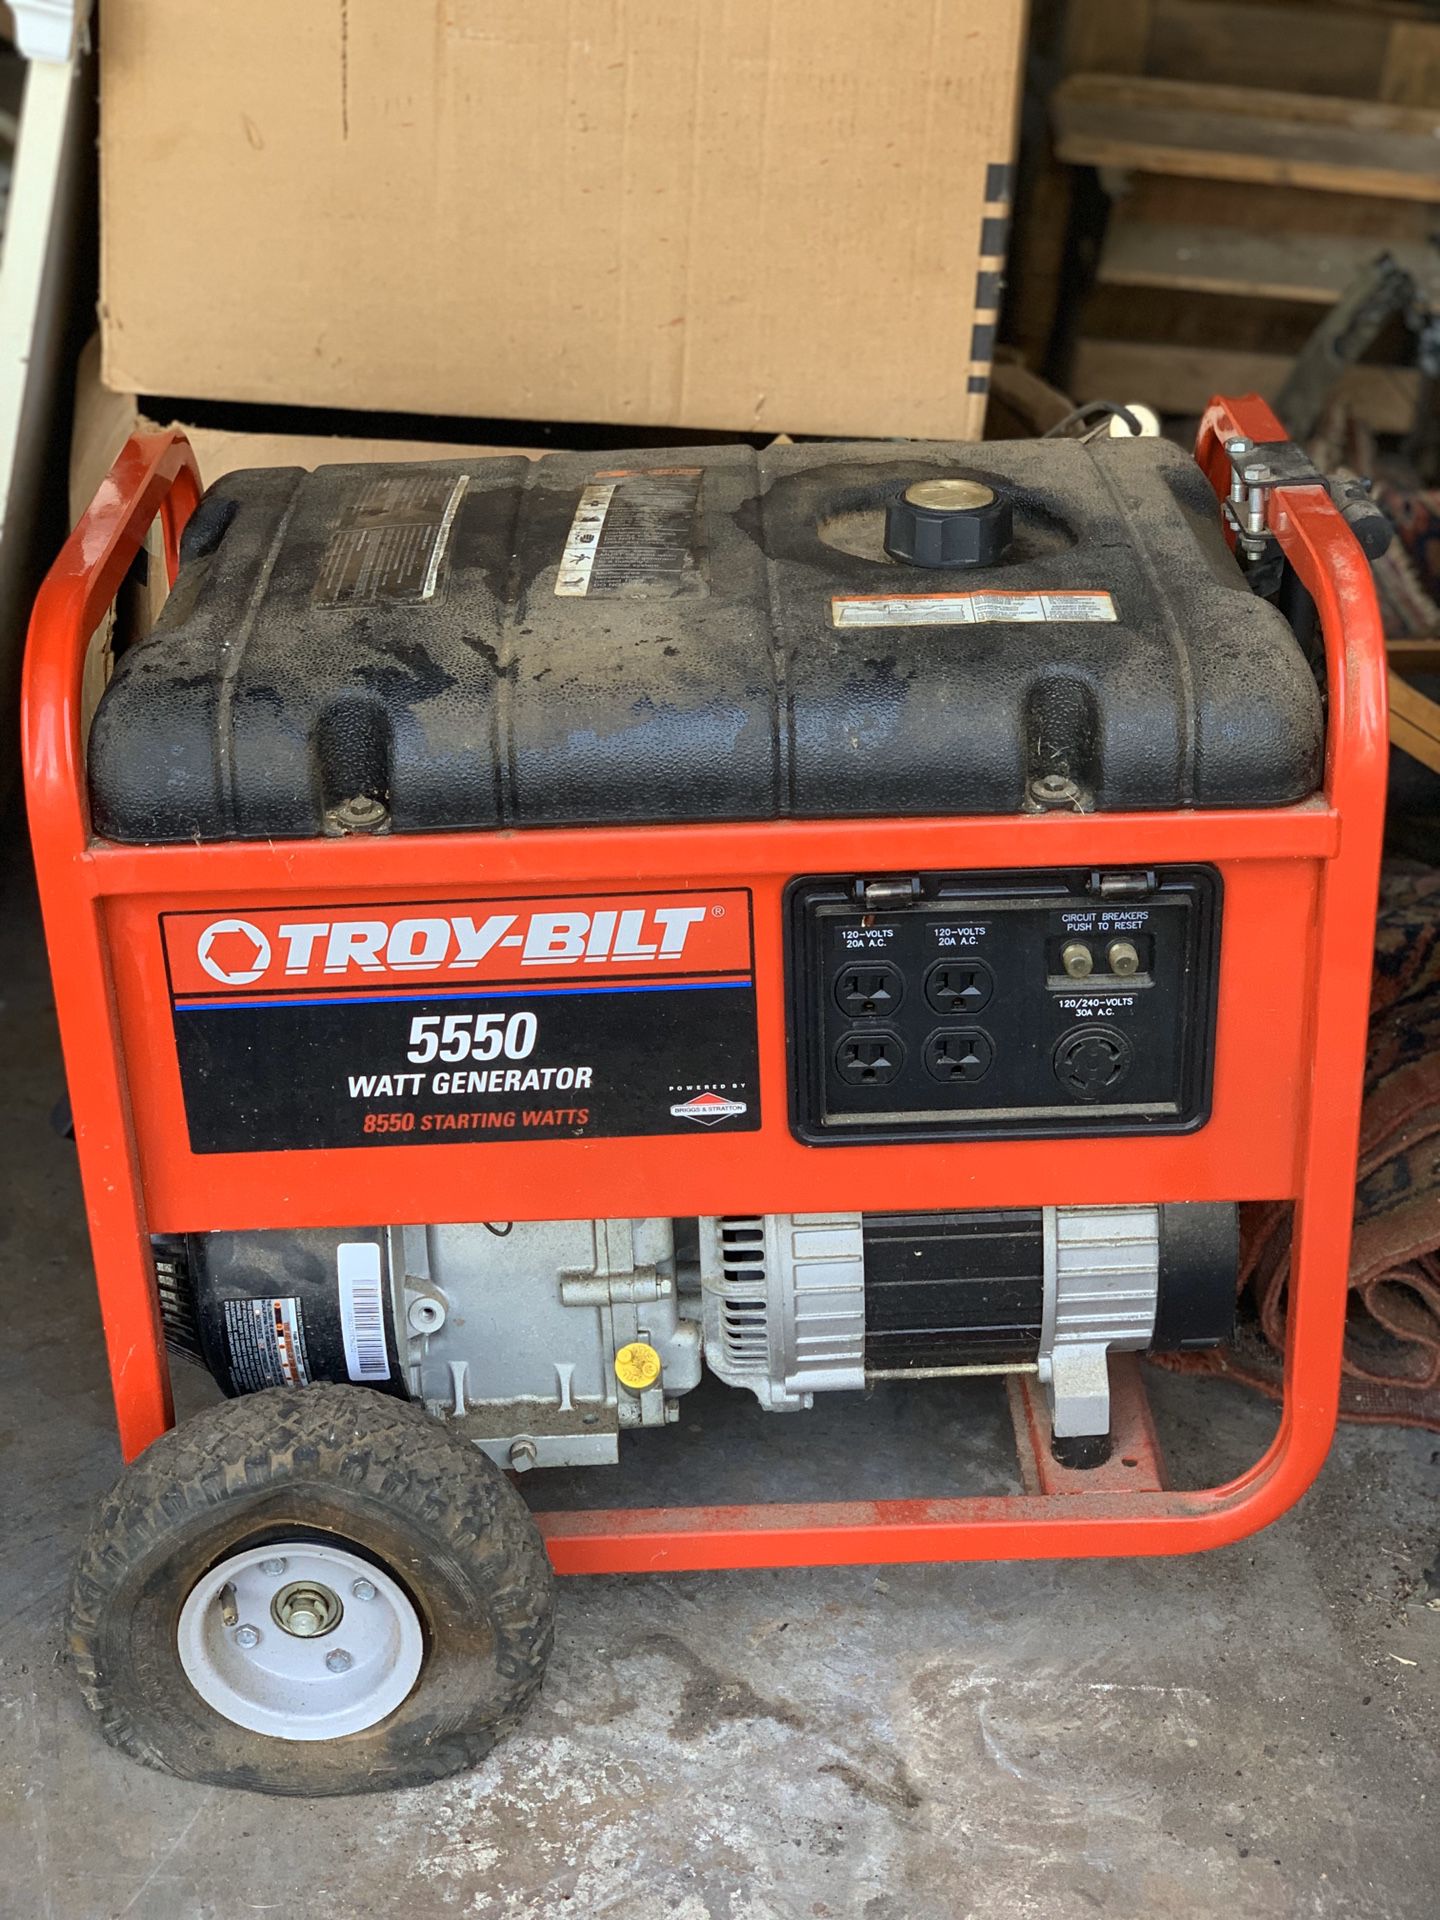 Troy-Bilt Generator! Like brand new!